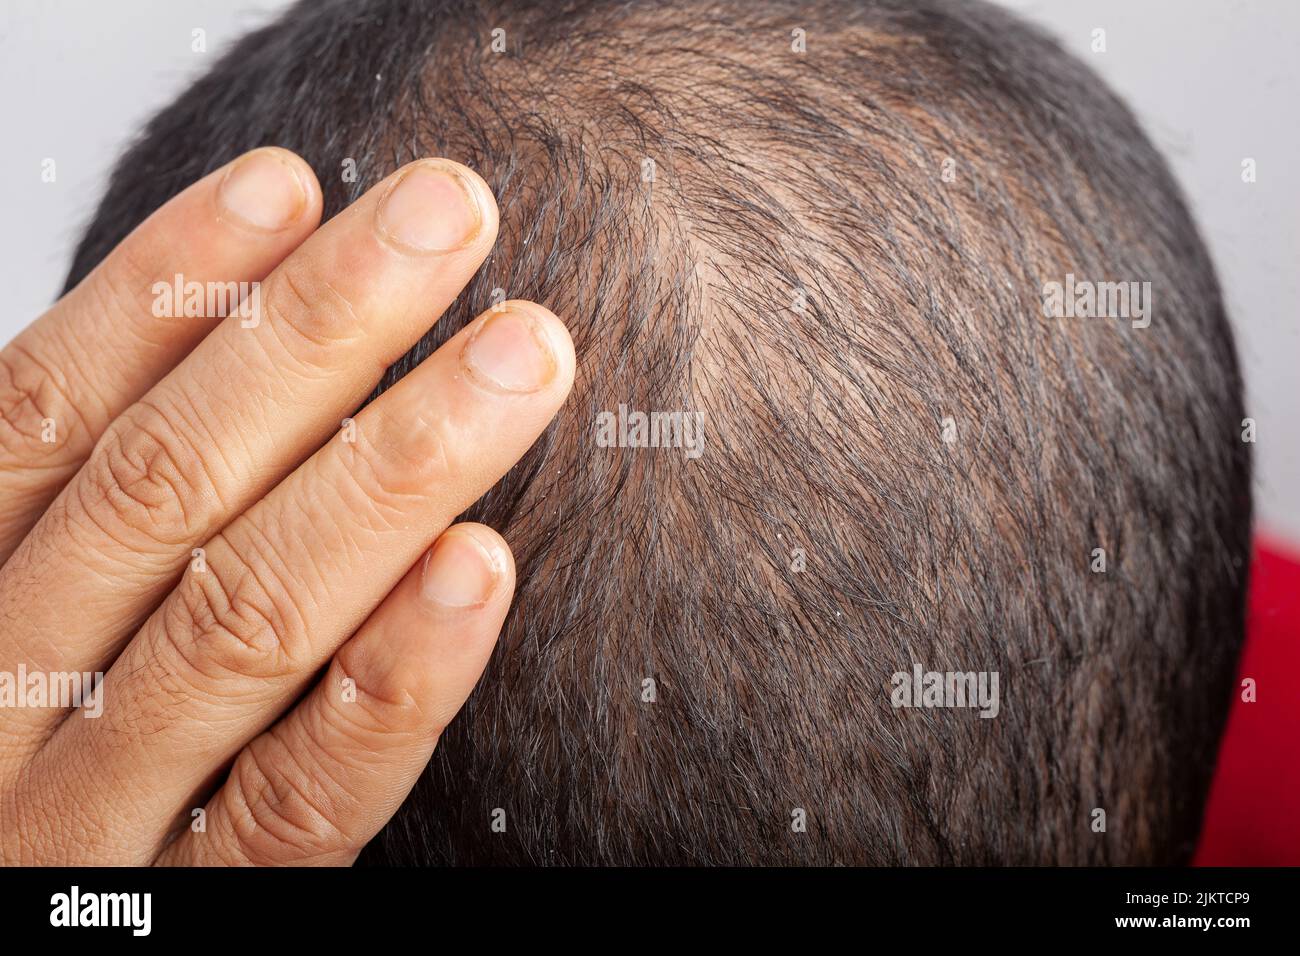 Kahlheit, Haarausfall, Schuppen am Kopf, sichtbare Kopfhaut. Mann, der sein dünnes Haar oder seinen Alopezie-Kopf berührt. Stockfoto